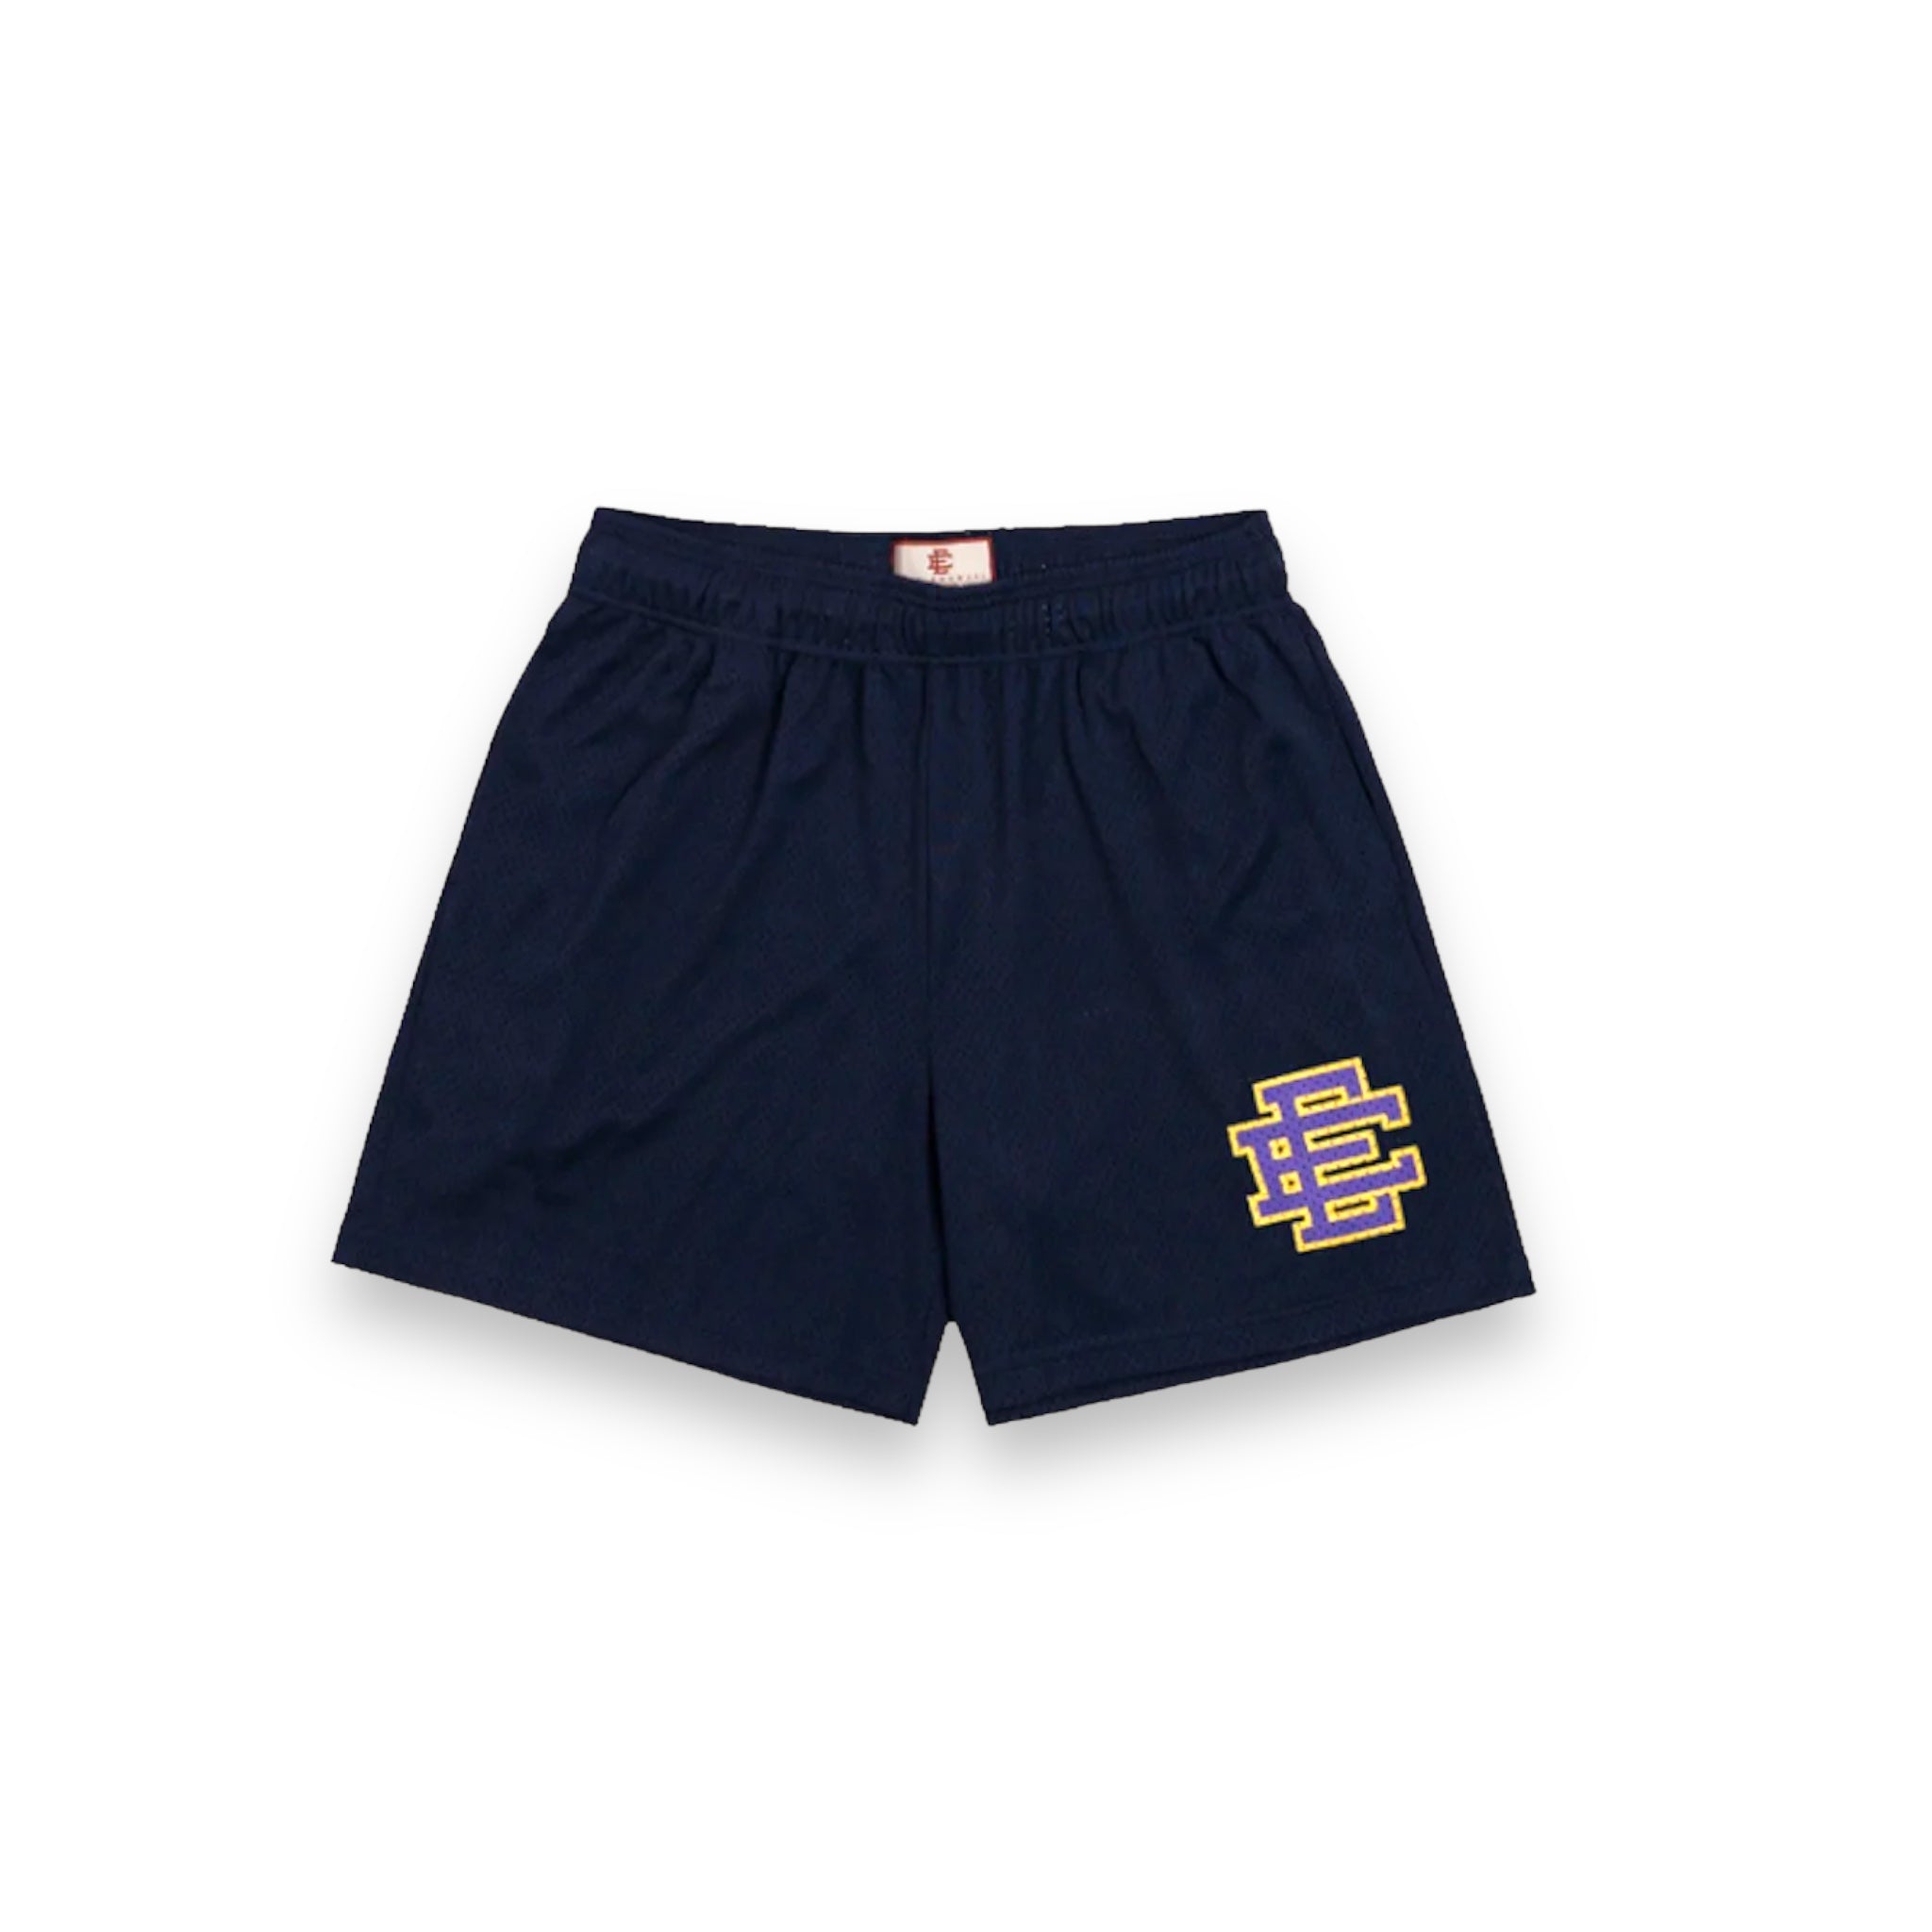 Eric Emanuel Navy/Purple Shorts